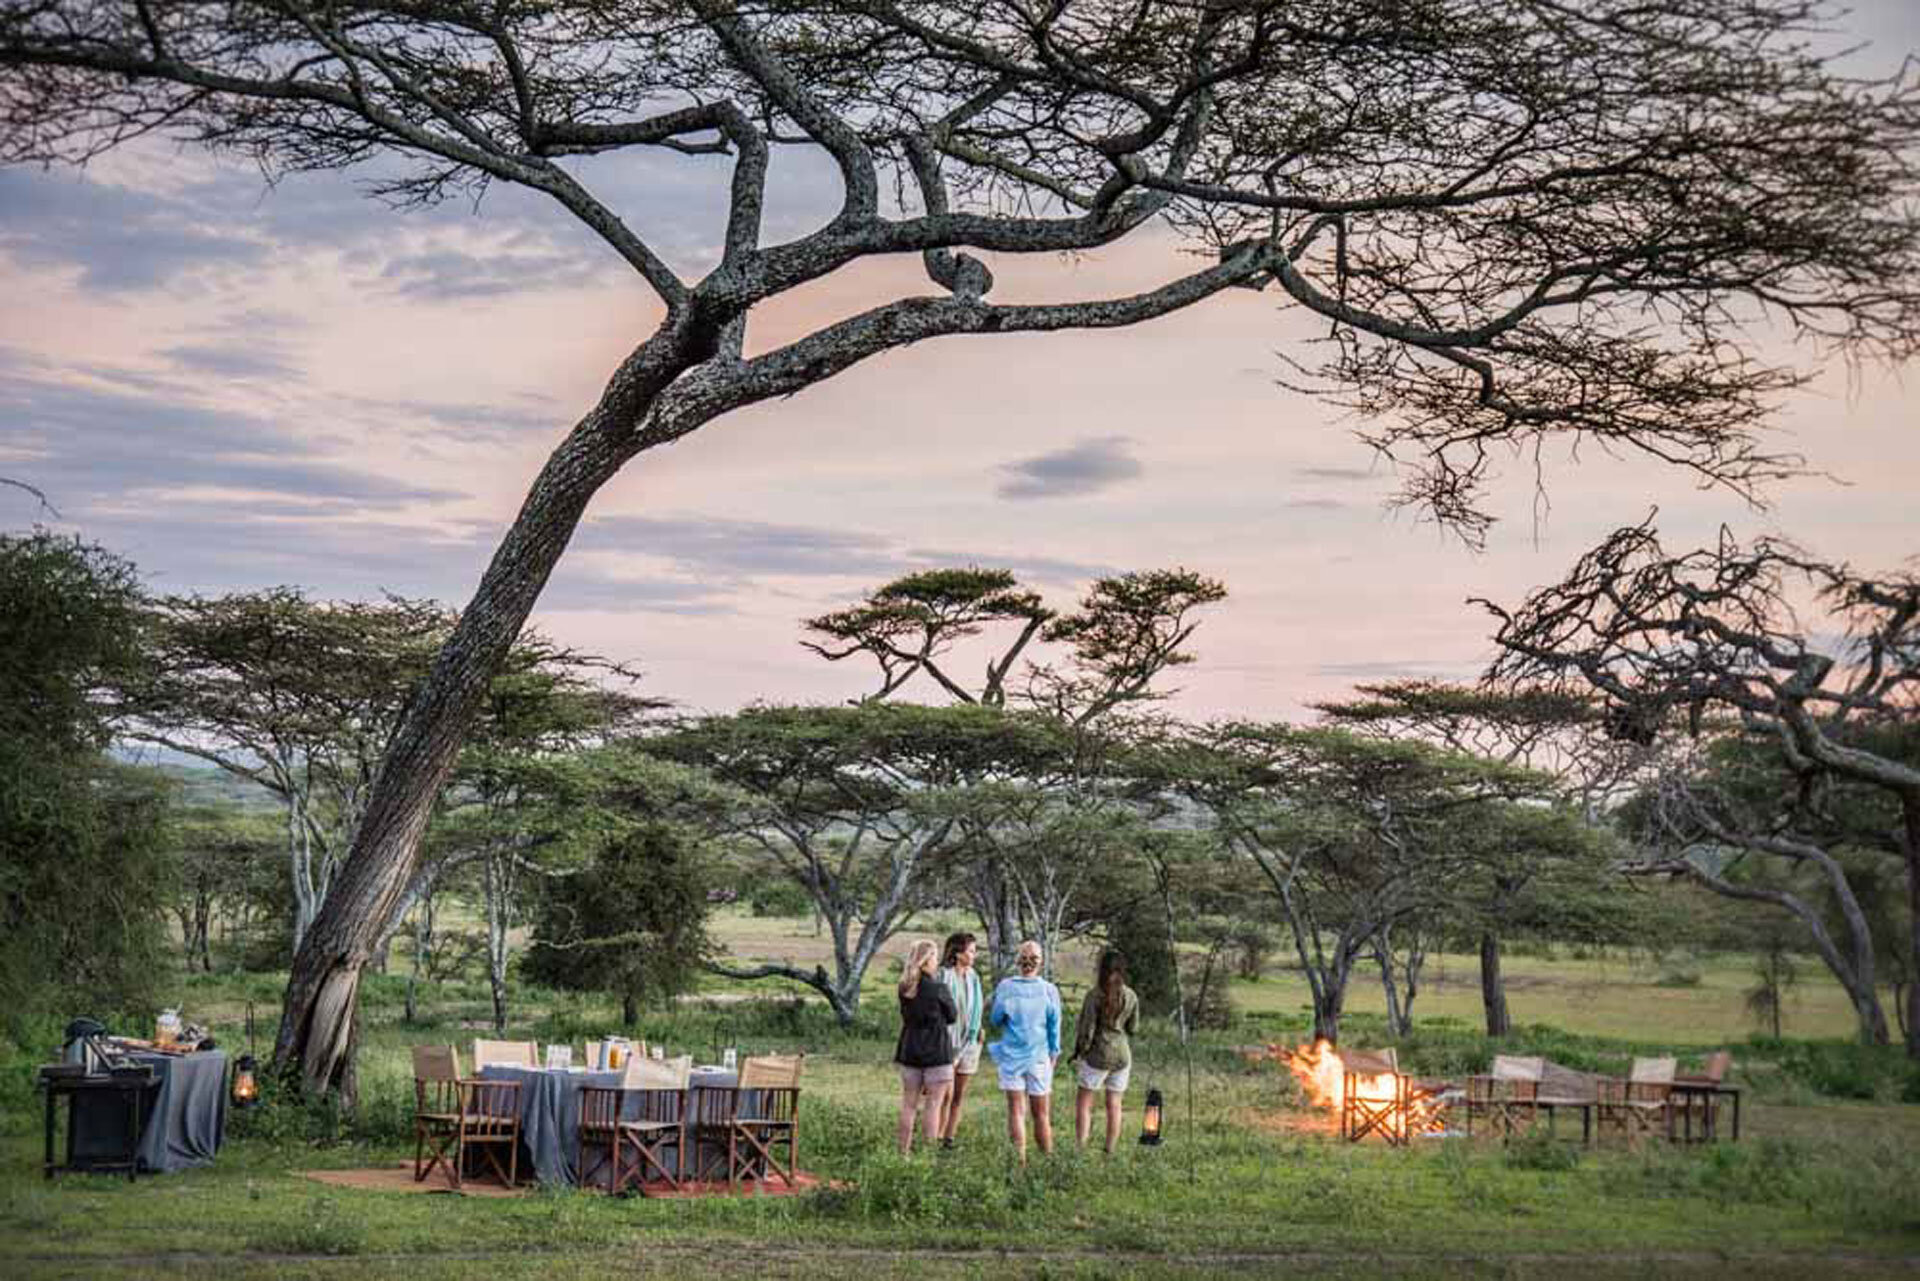 Legendary Serengeti Camp: Luxury Safari in Tanzania